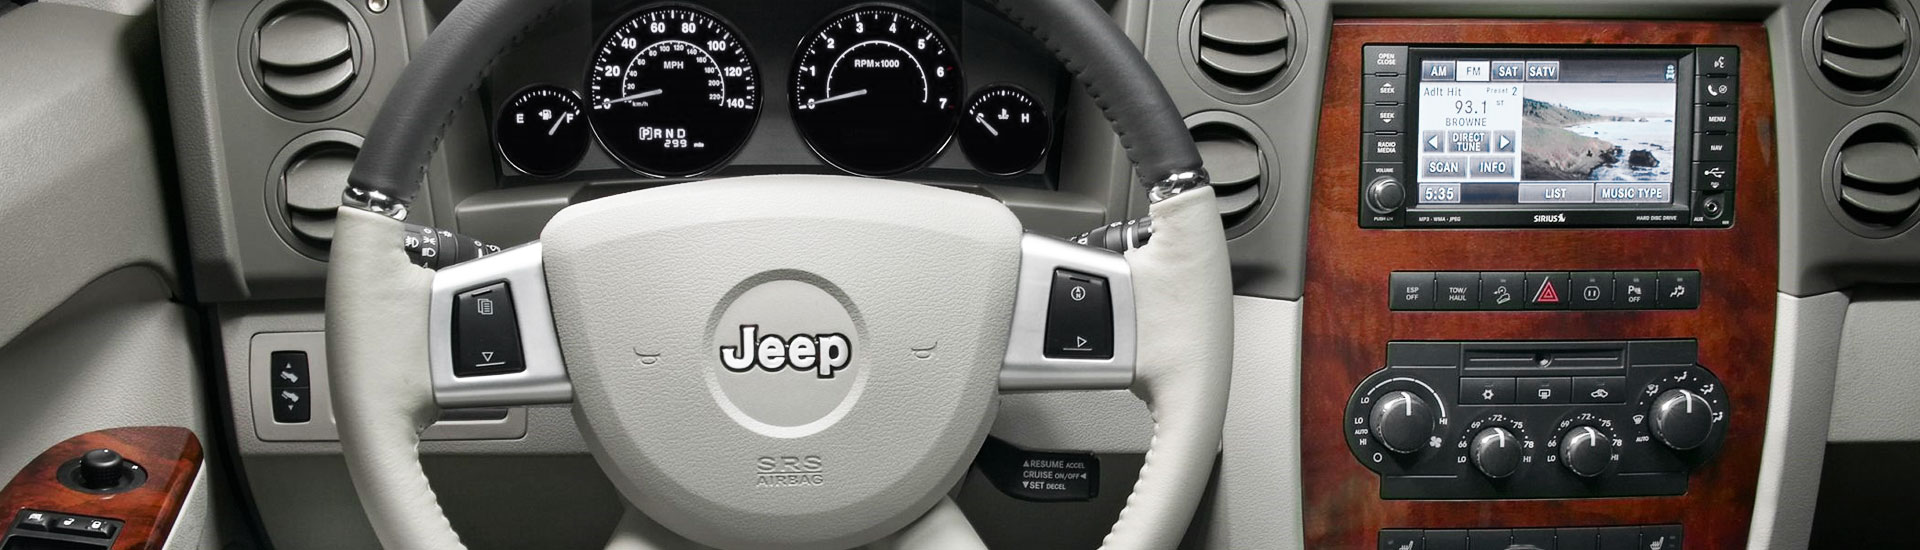 2003 Jeep Grand Cherokee Custom Dash Kits